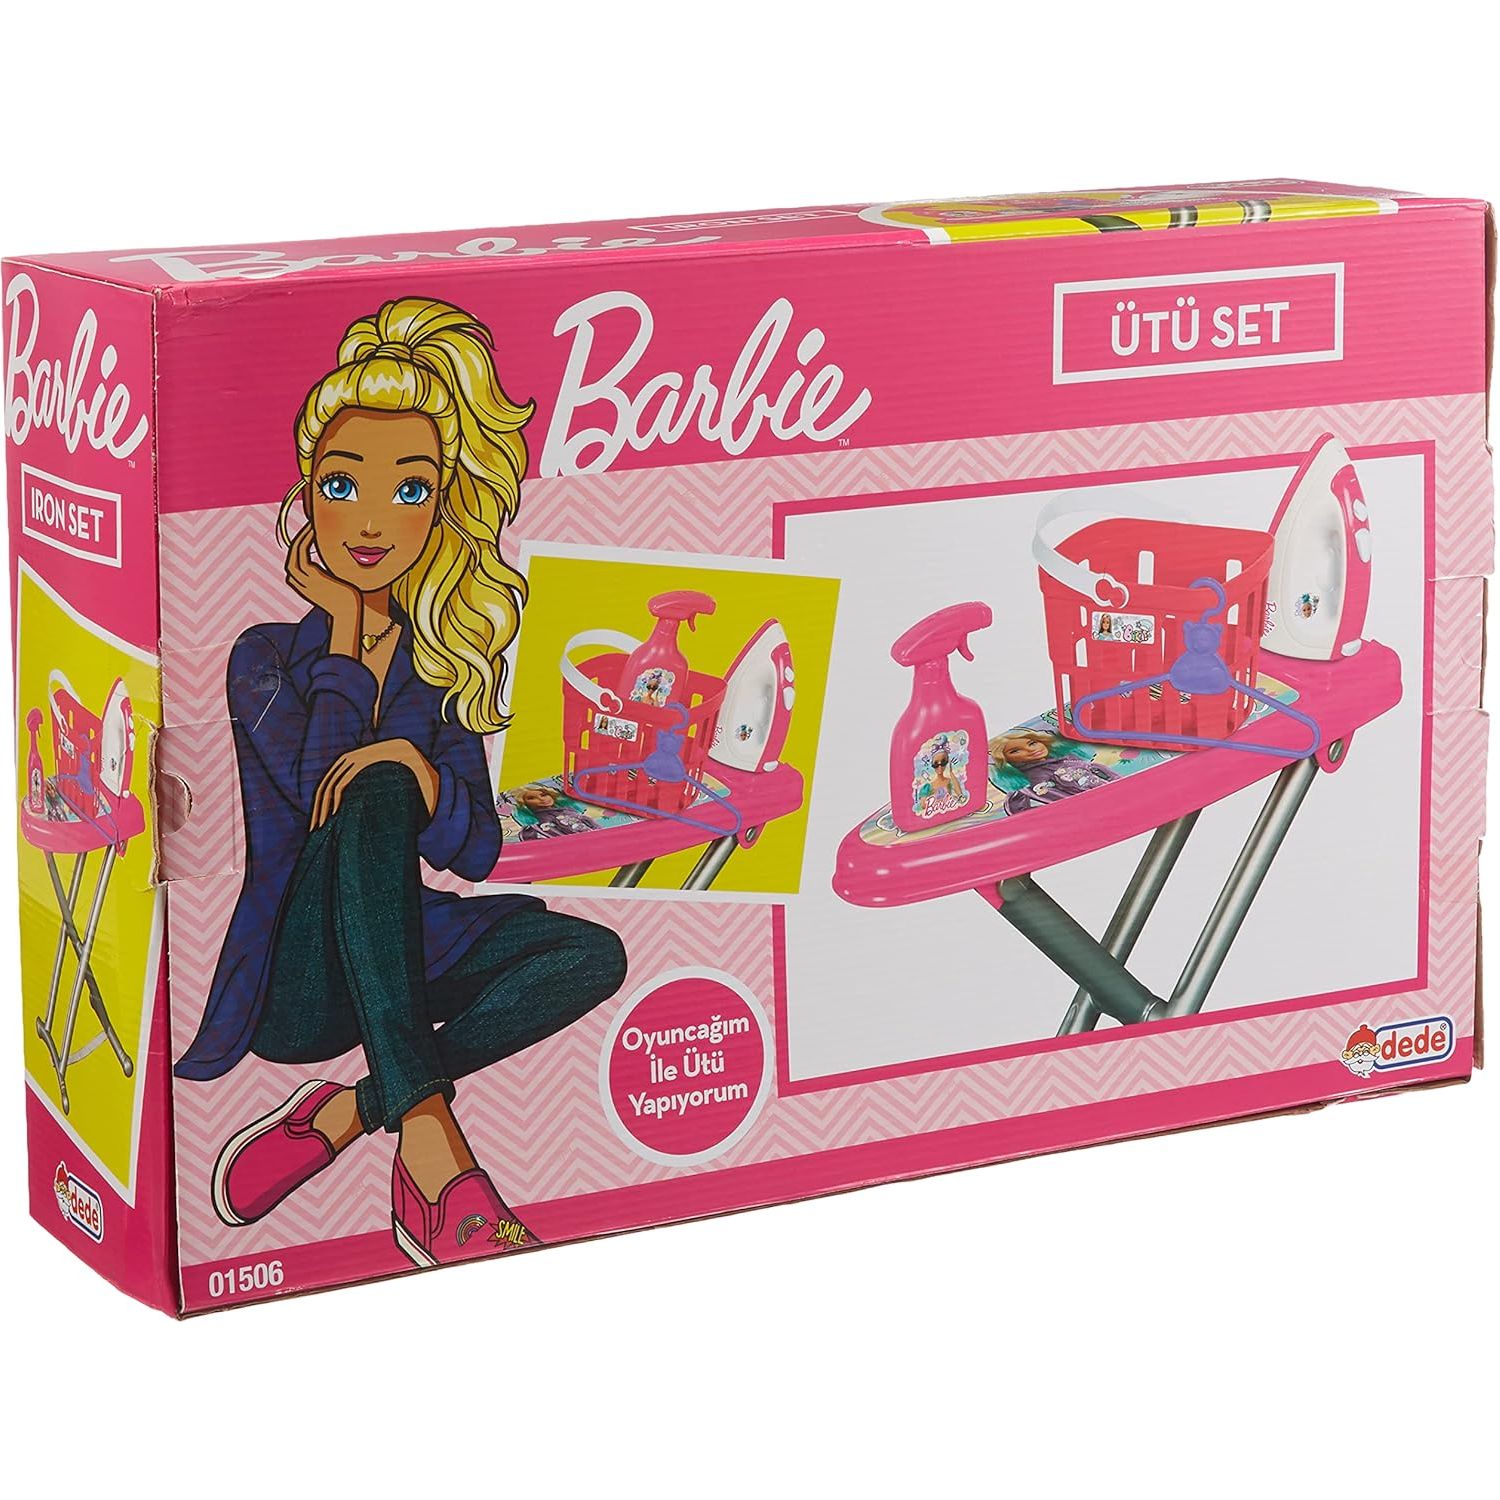 Dede Barbie Iron Set For Girls